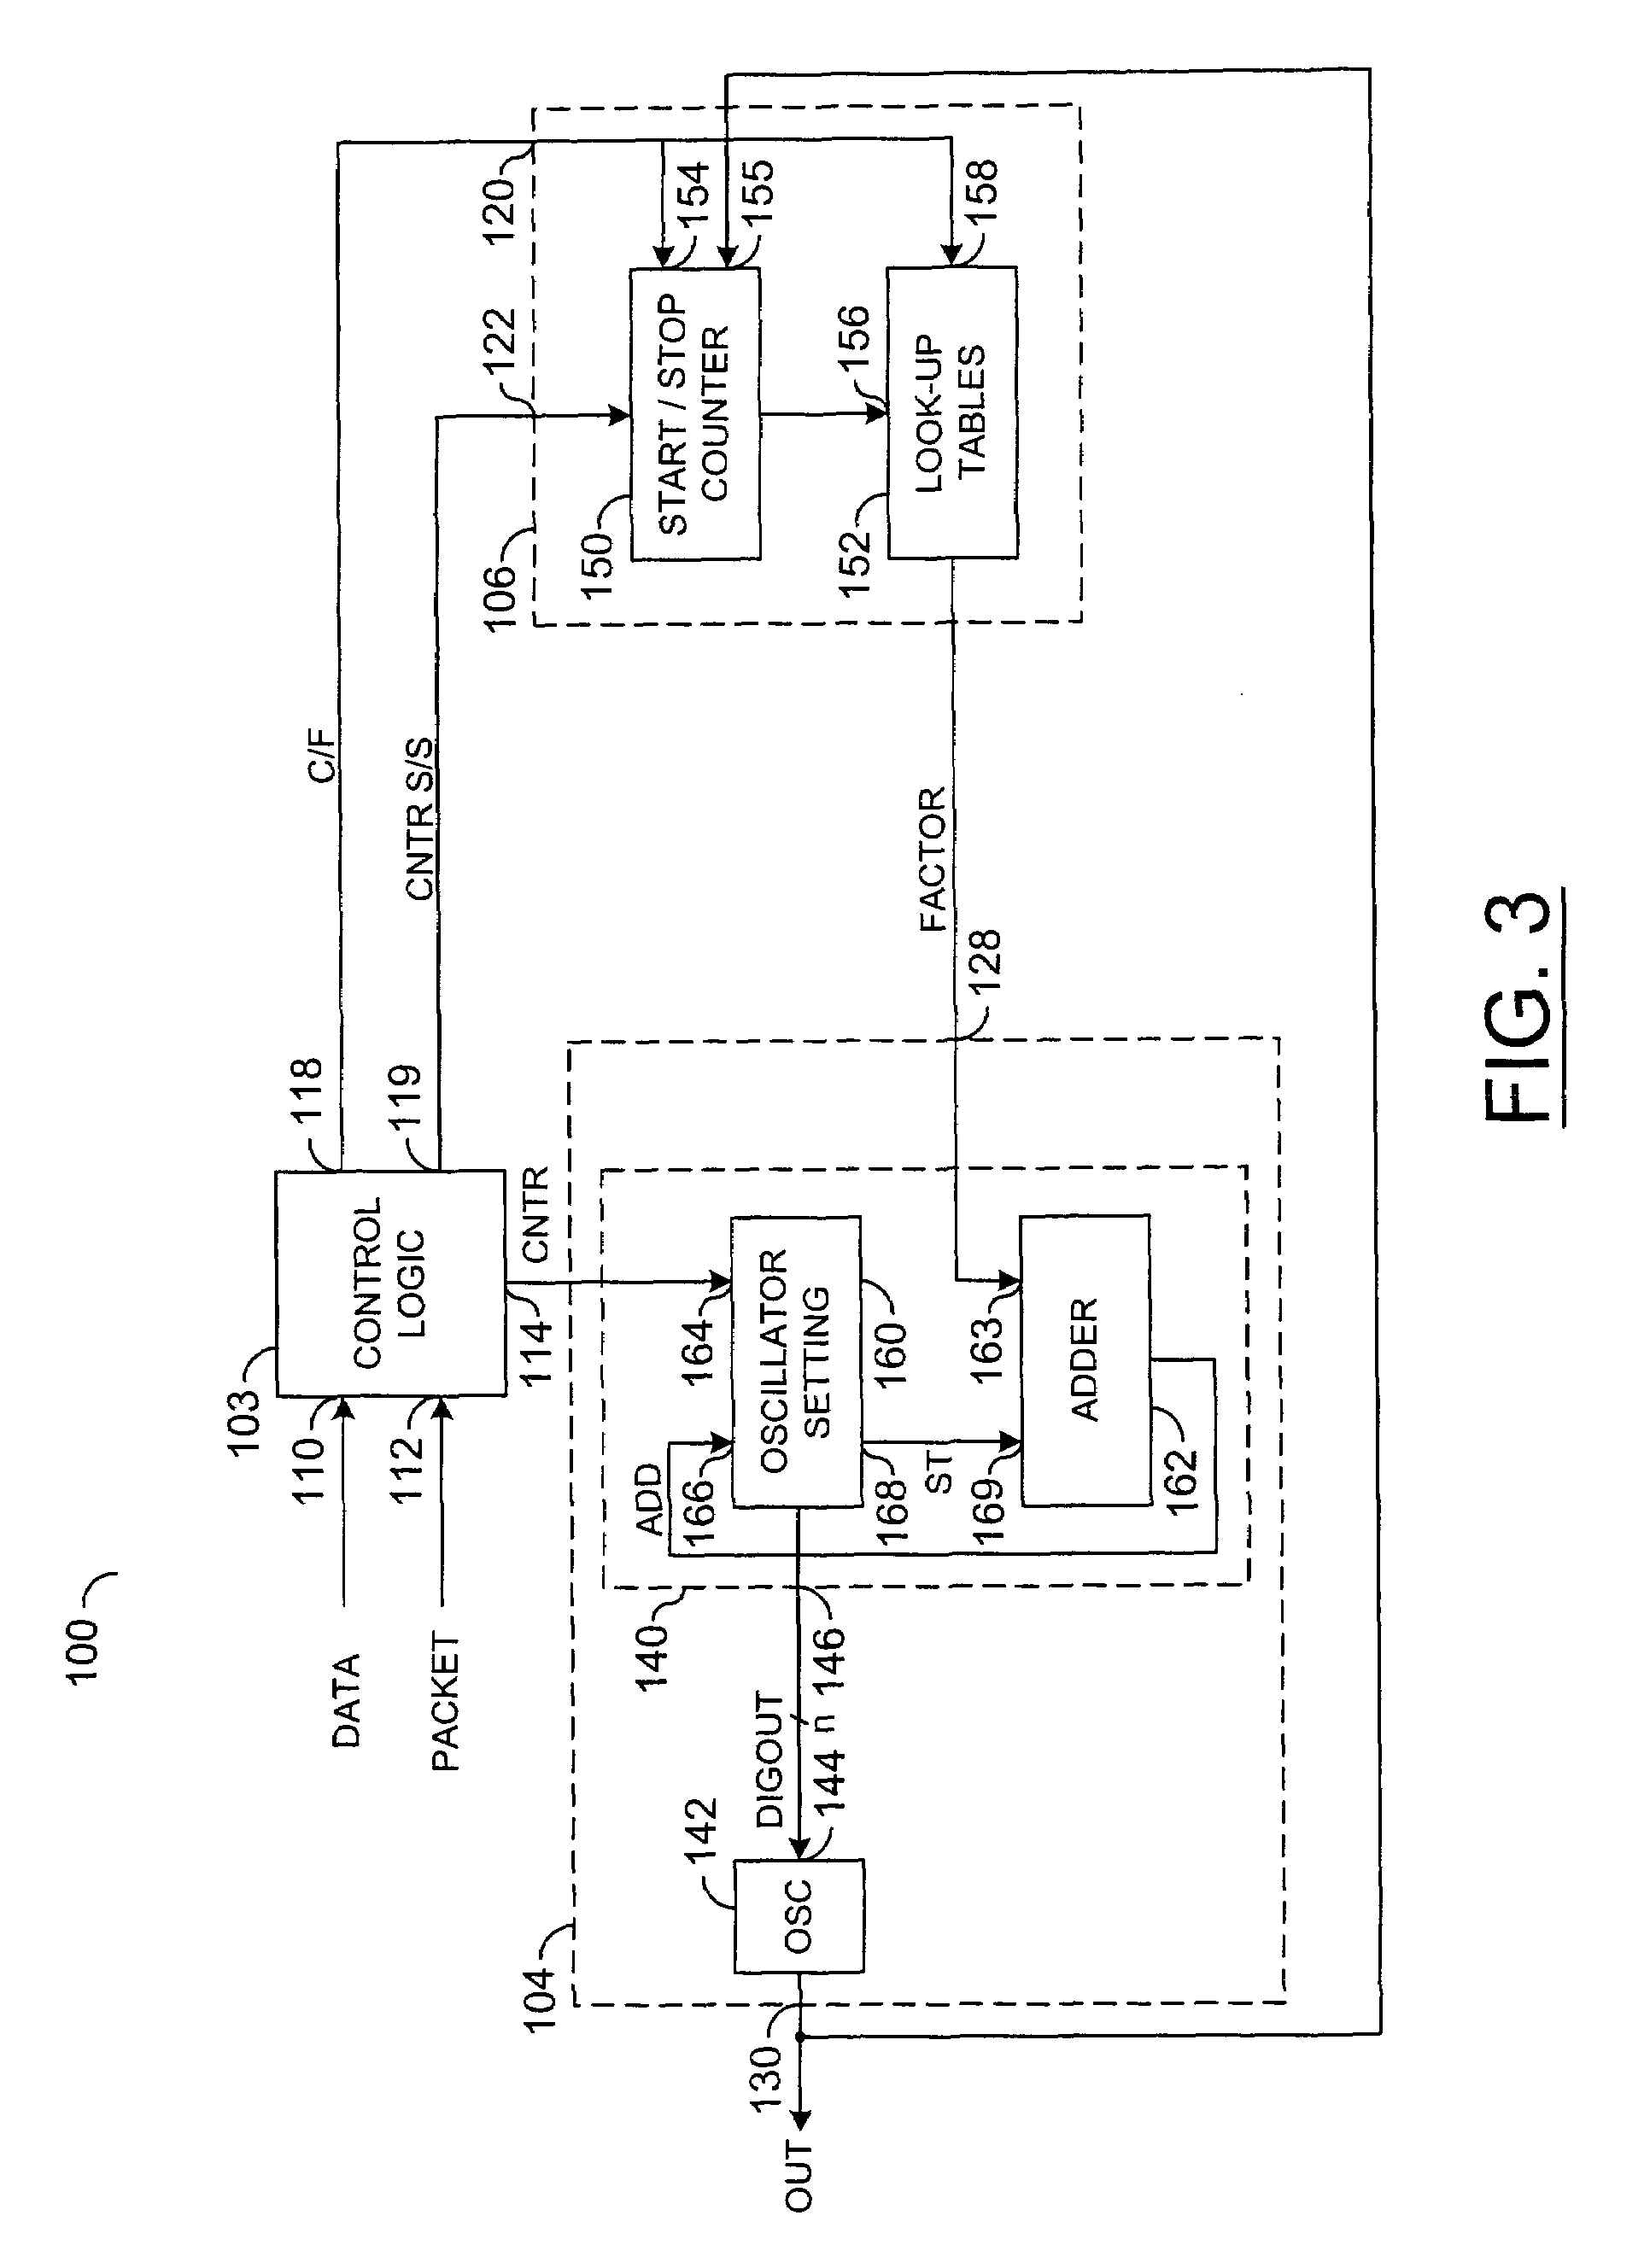 Circuit for locking an oscillator to a data stream